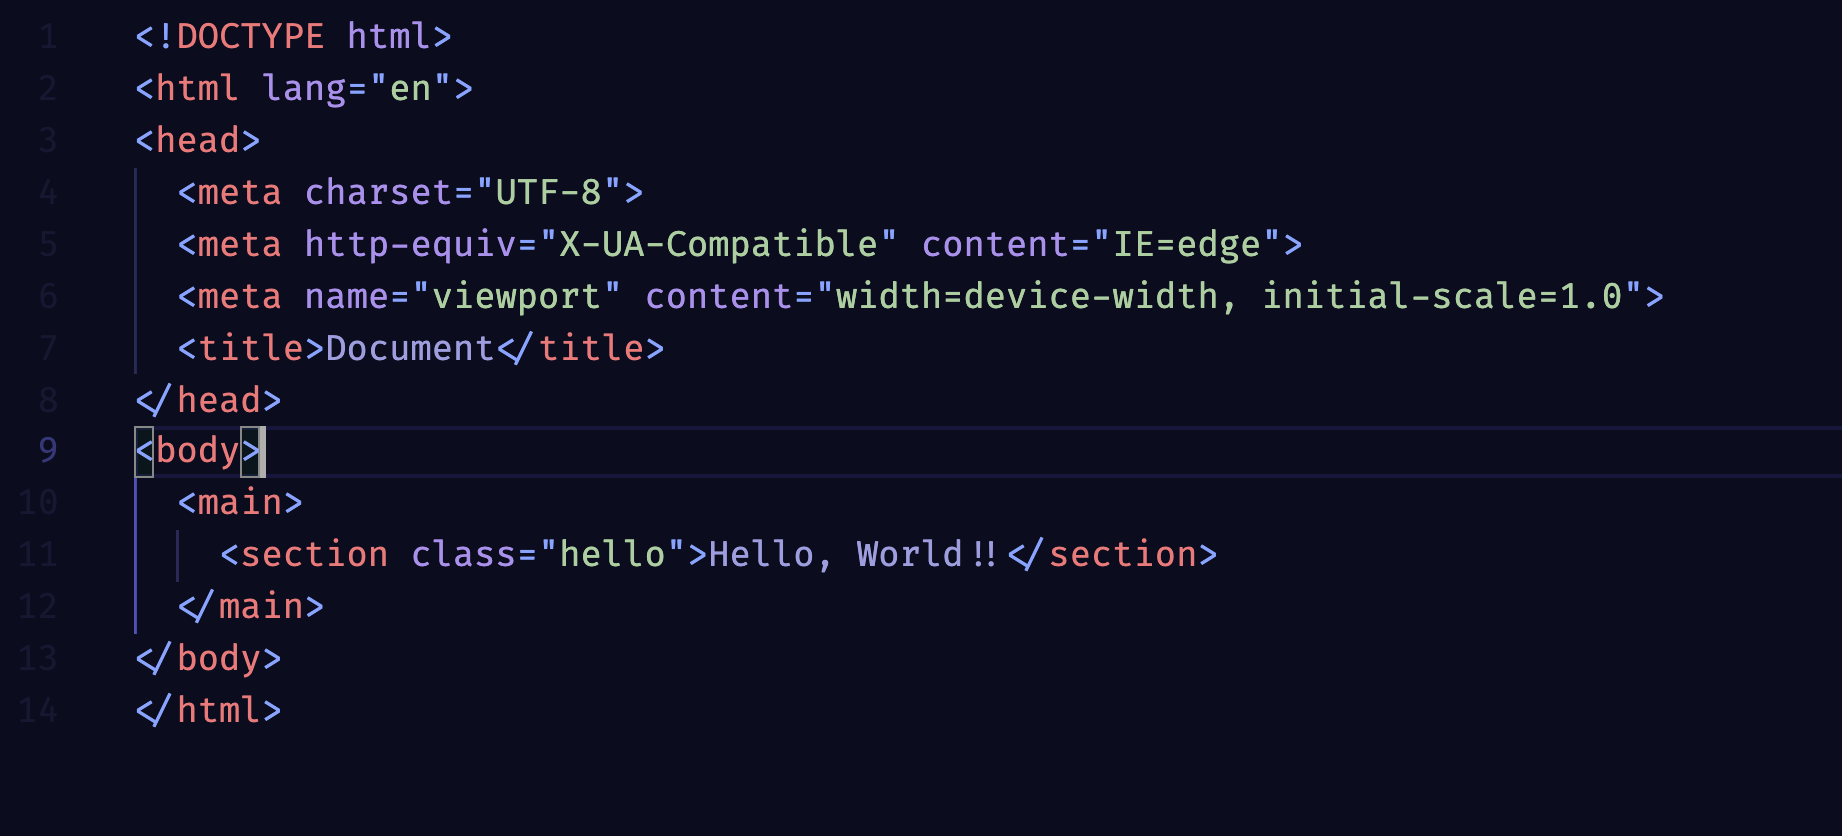 Hello World example in HTML